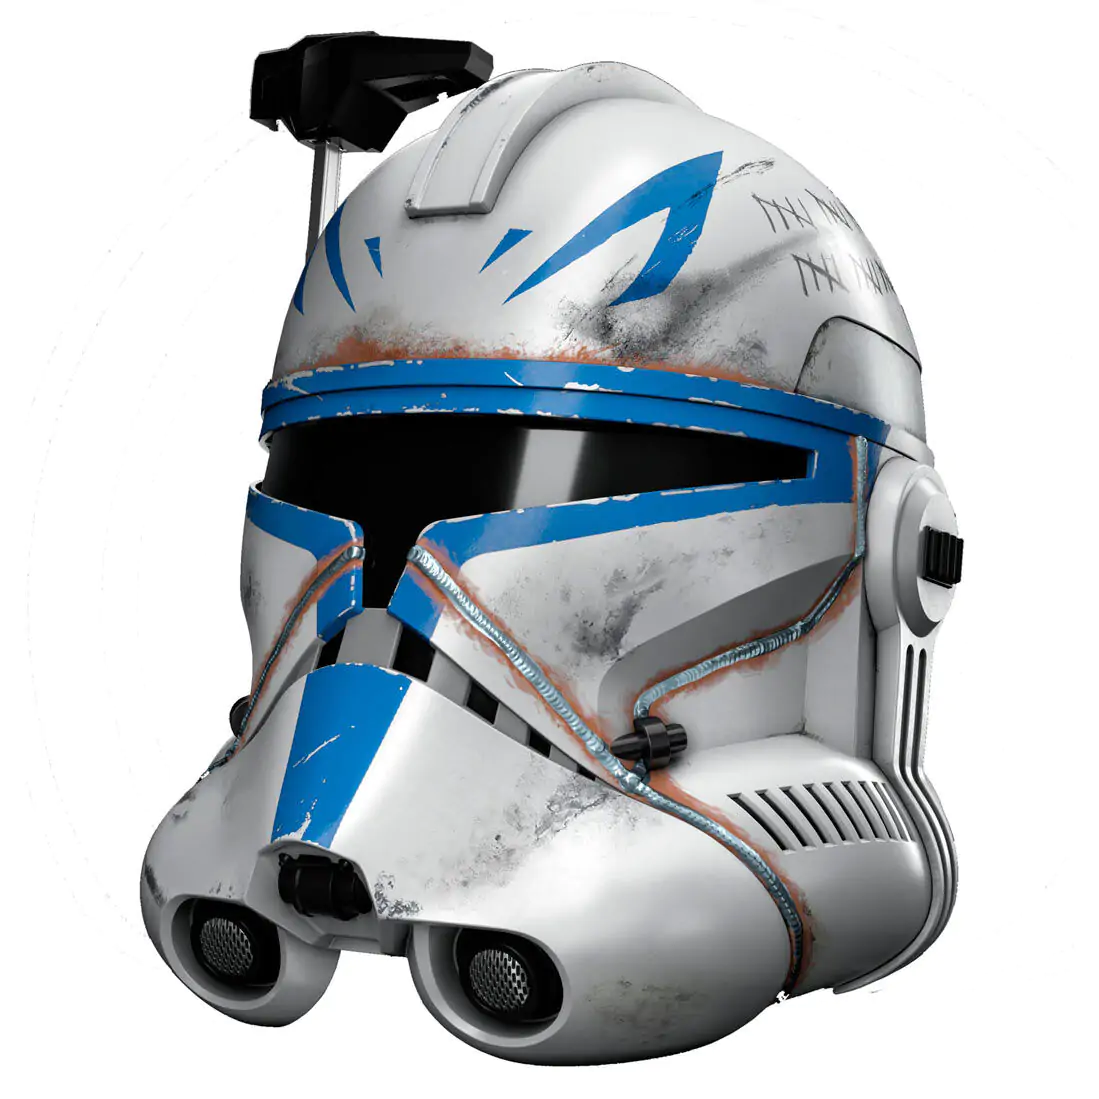 Star Wars Clone Captain Rex Electronic helmet termékfotó